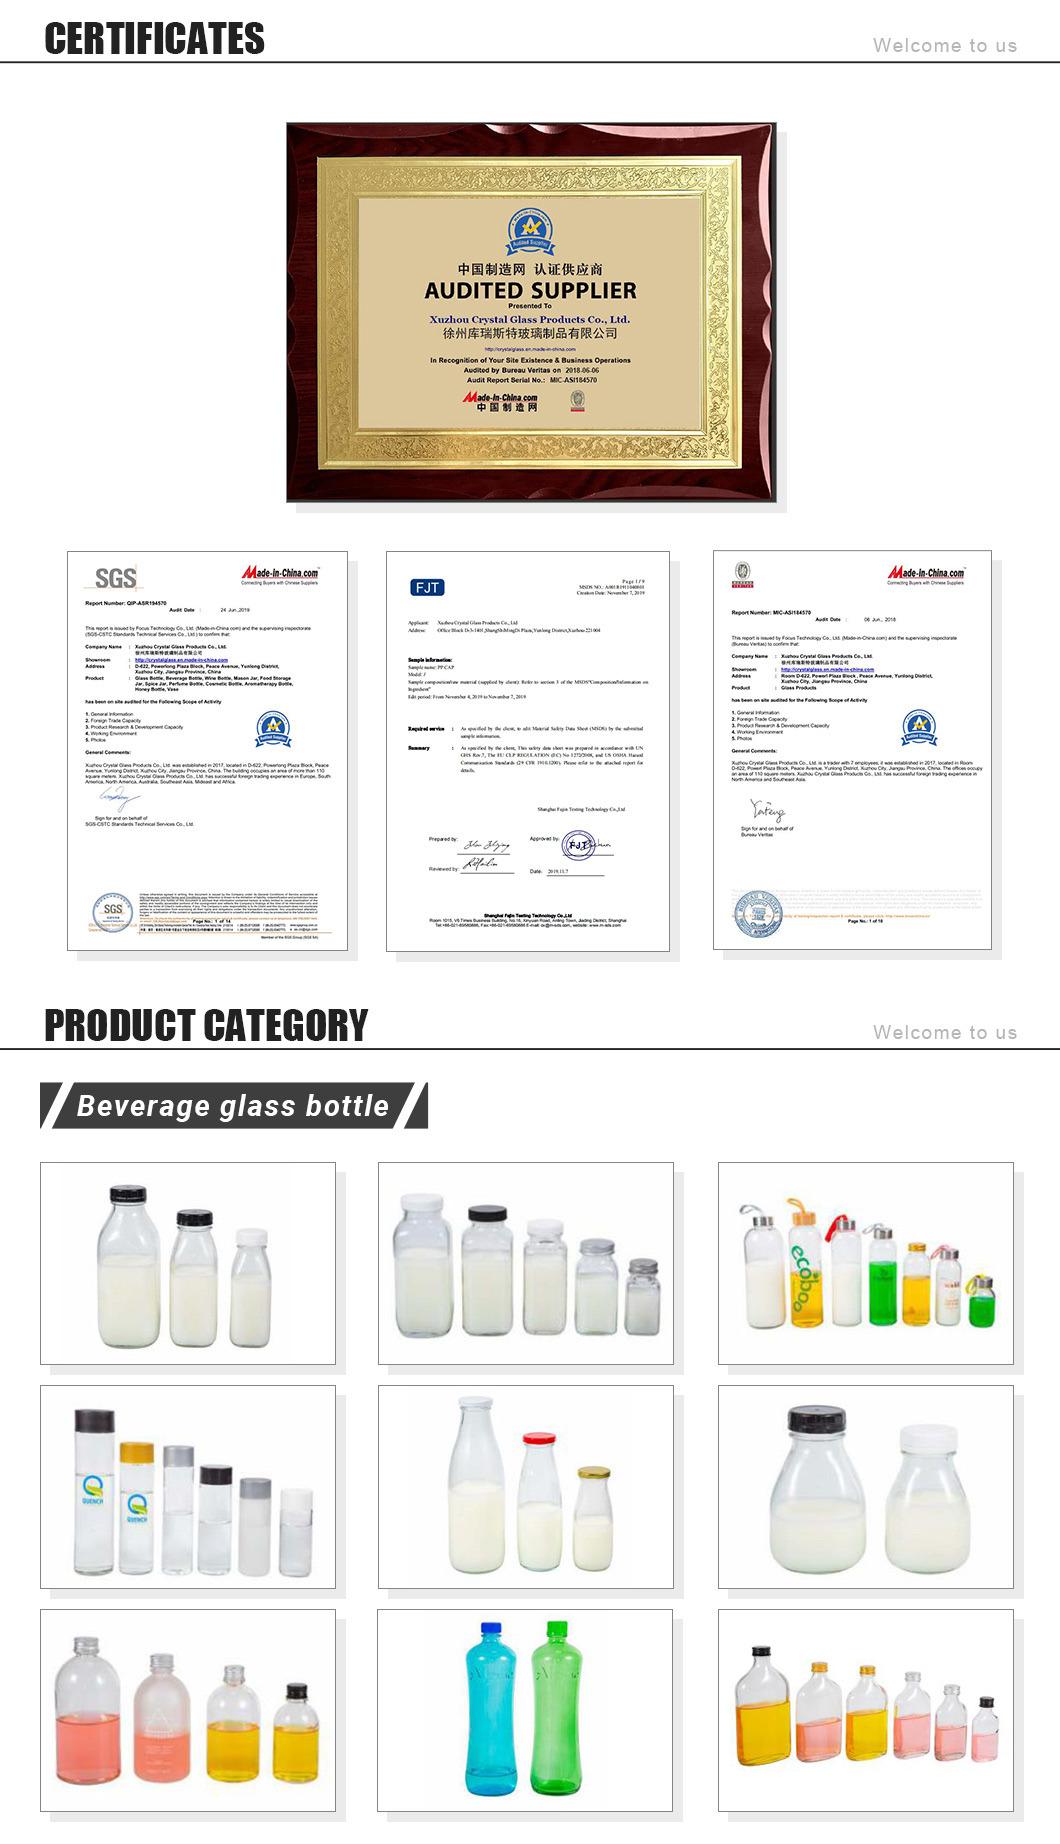 12oz 350ml Hexagon Shape Clear Glass Milk Juice Bottle with Cork Lid for Sale